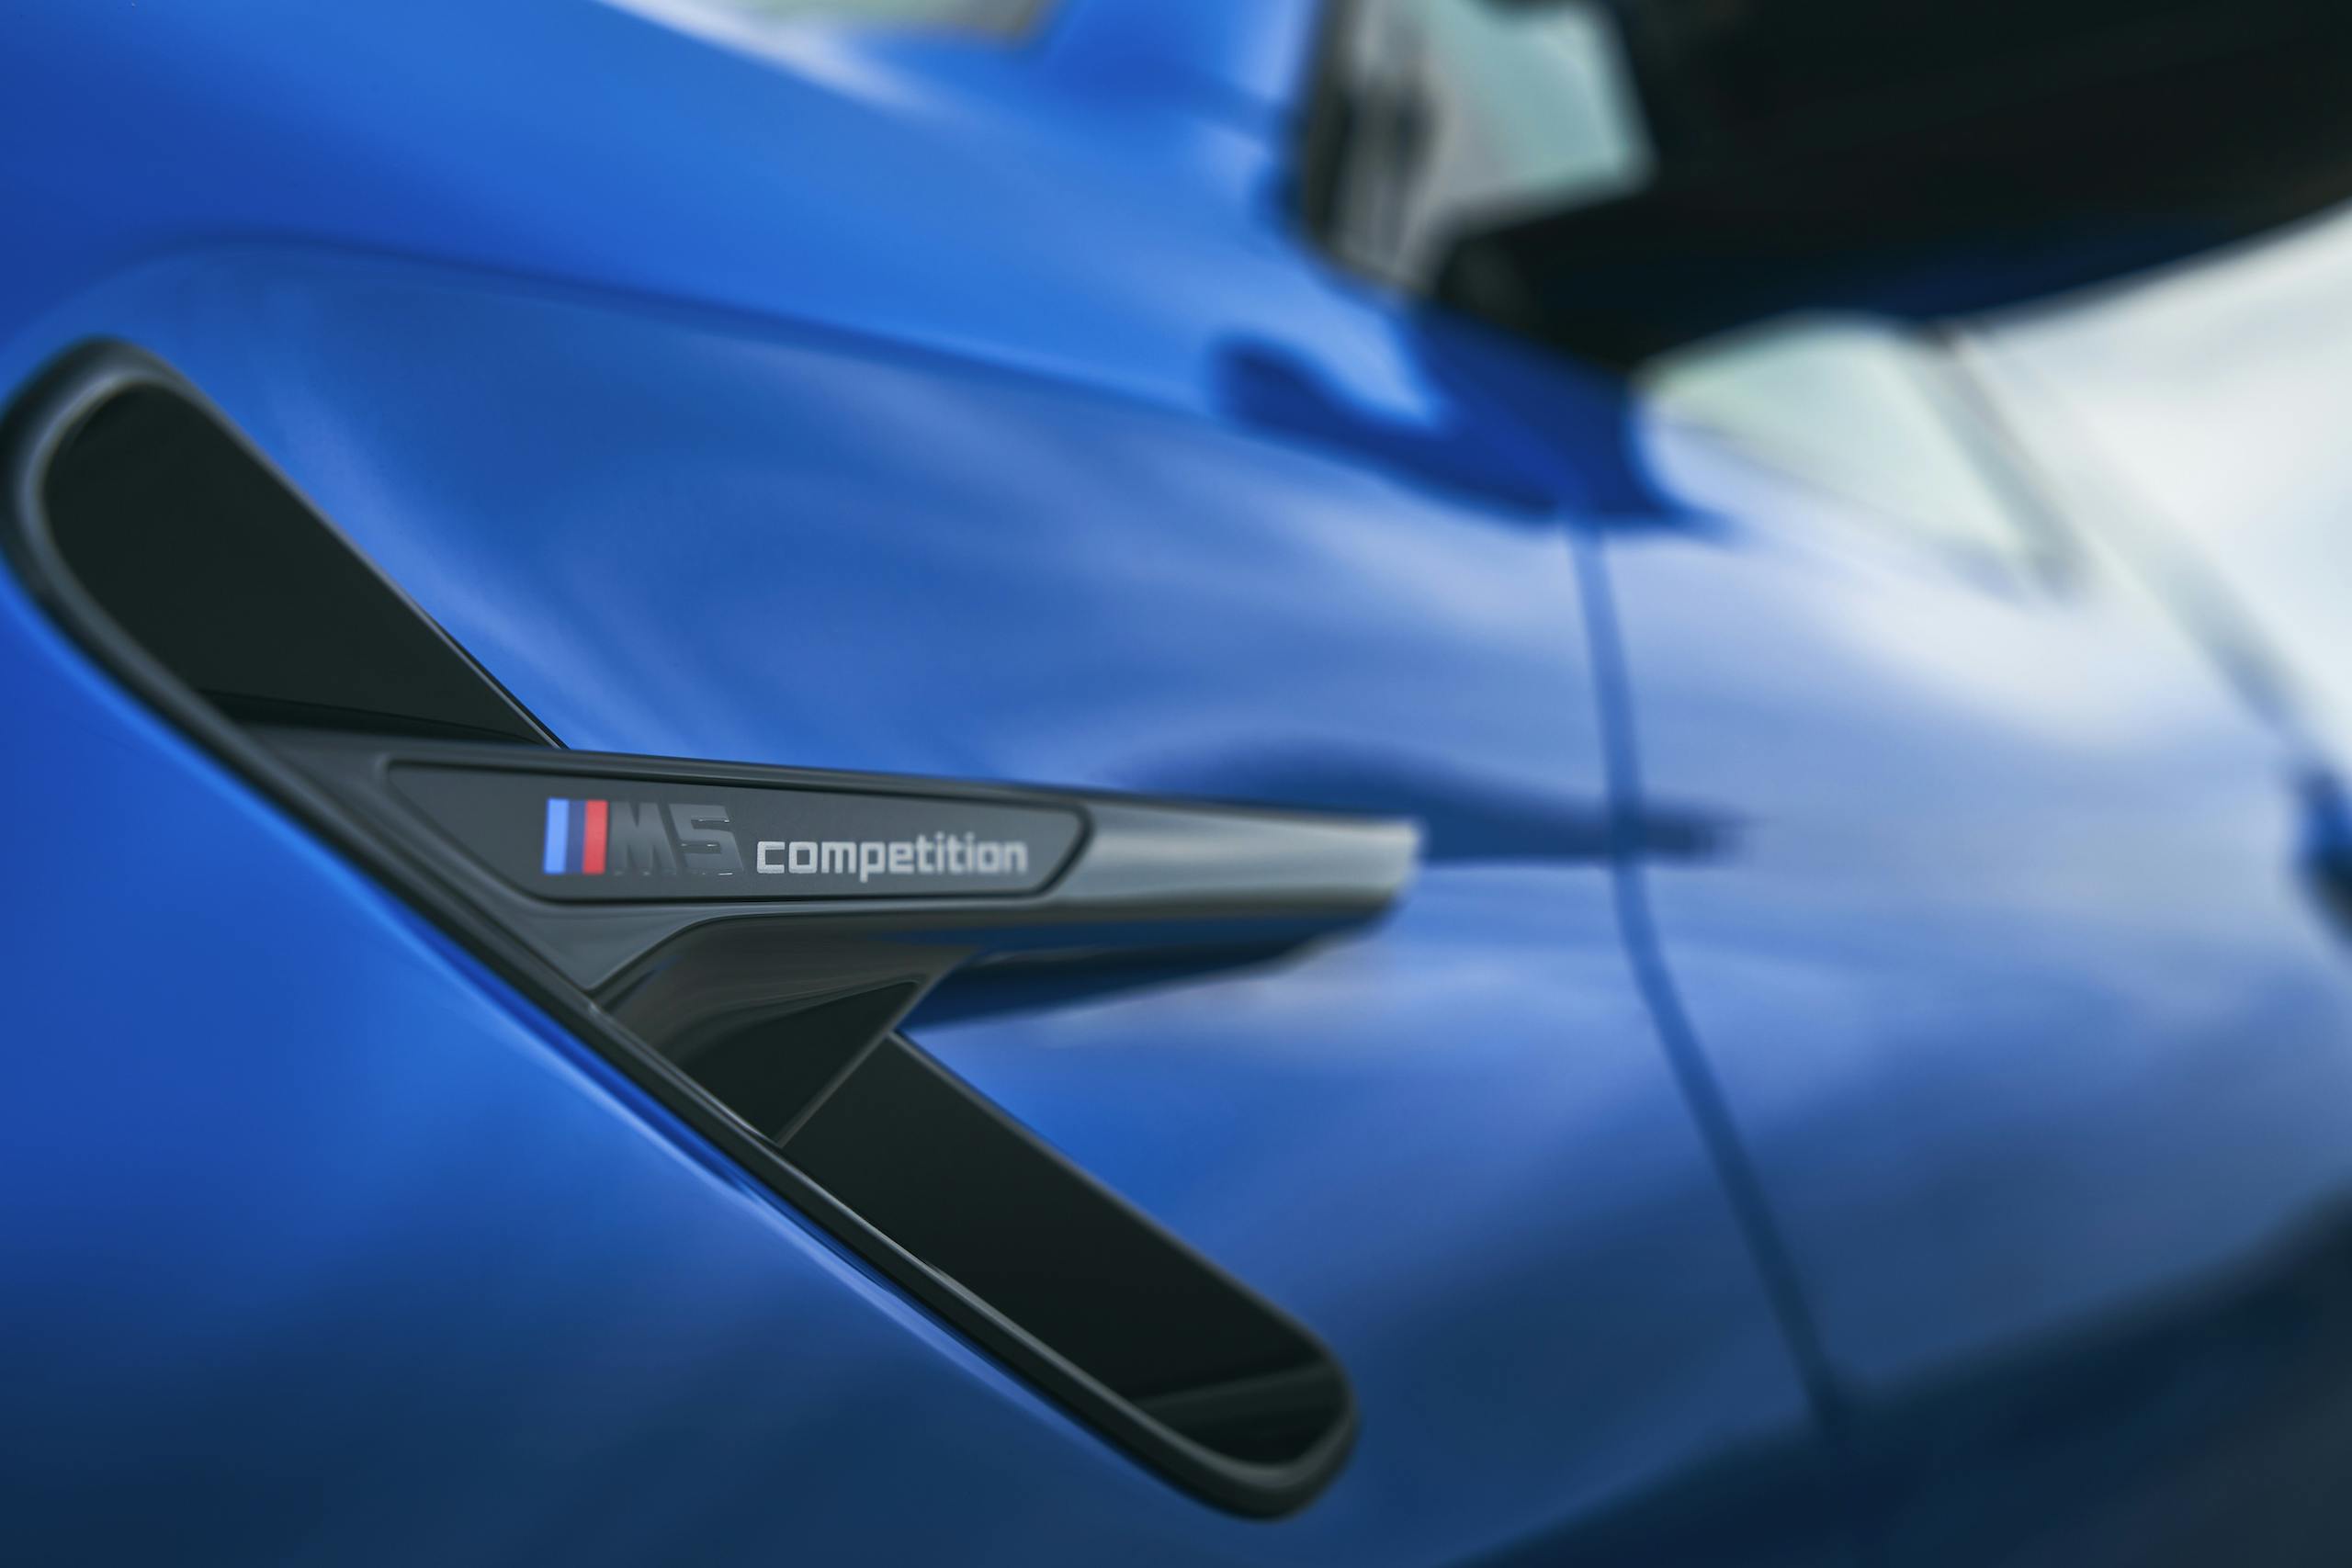 2021 BMW M5 Competition quarter panel badge detail